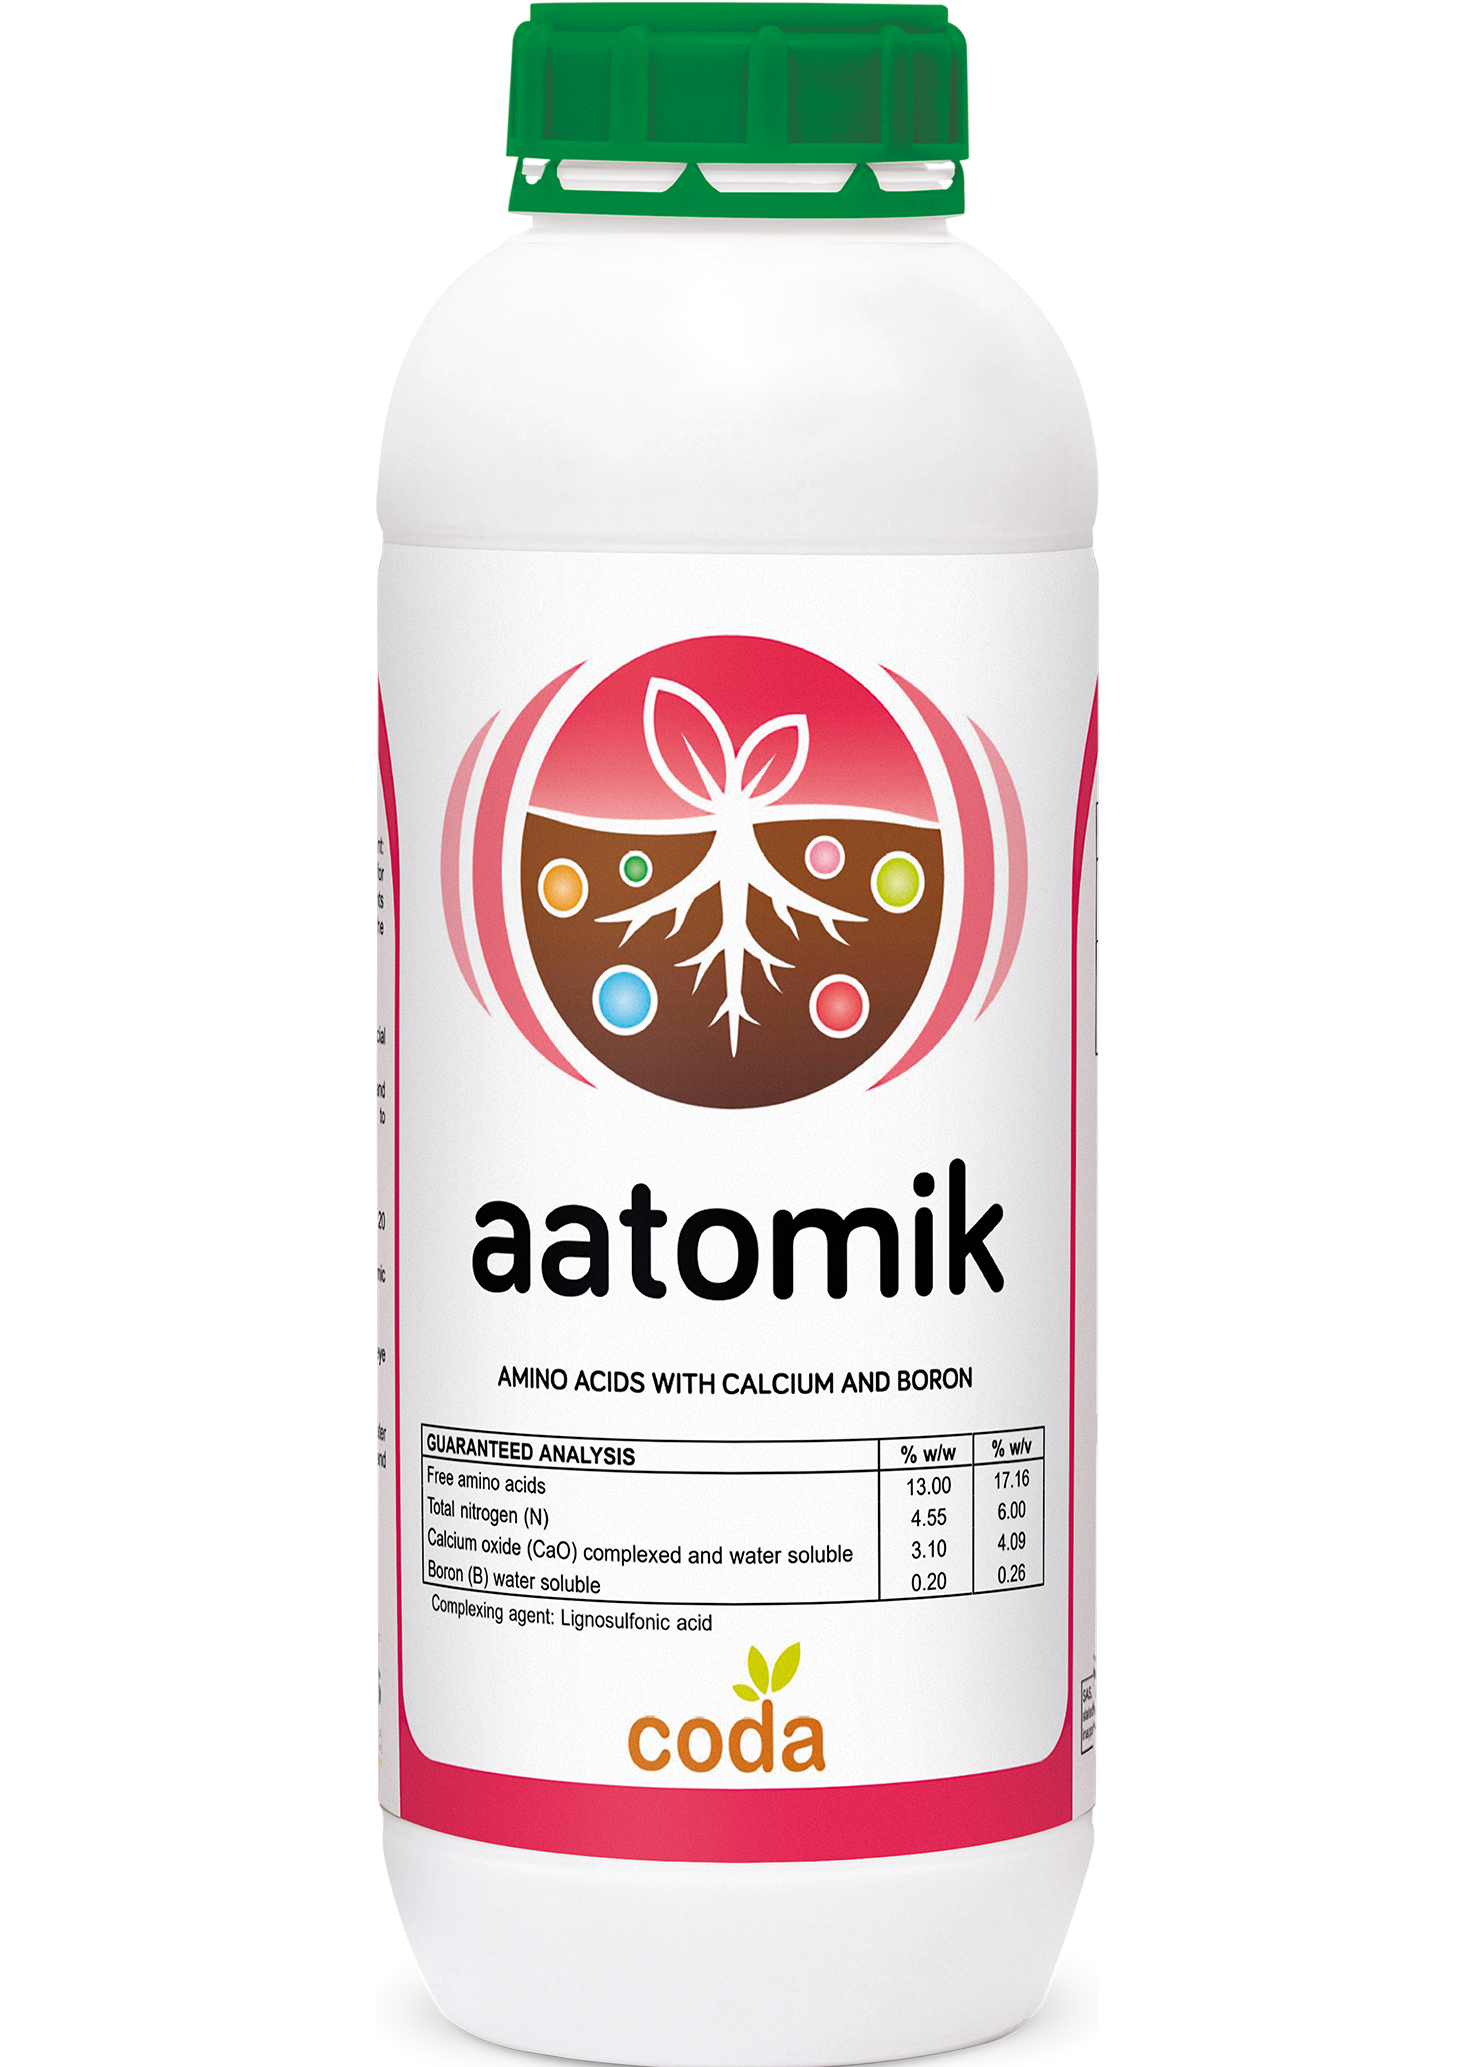 aatomik-coda-1L (for website)